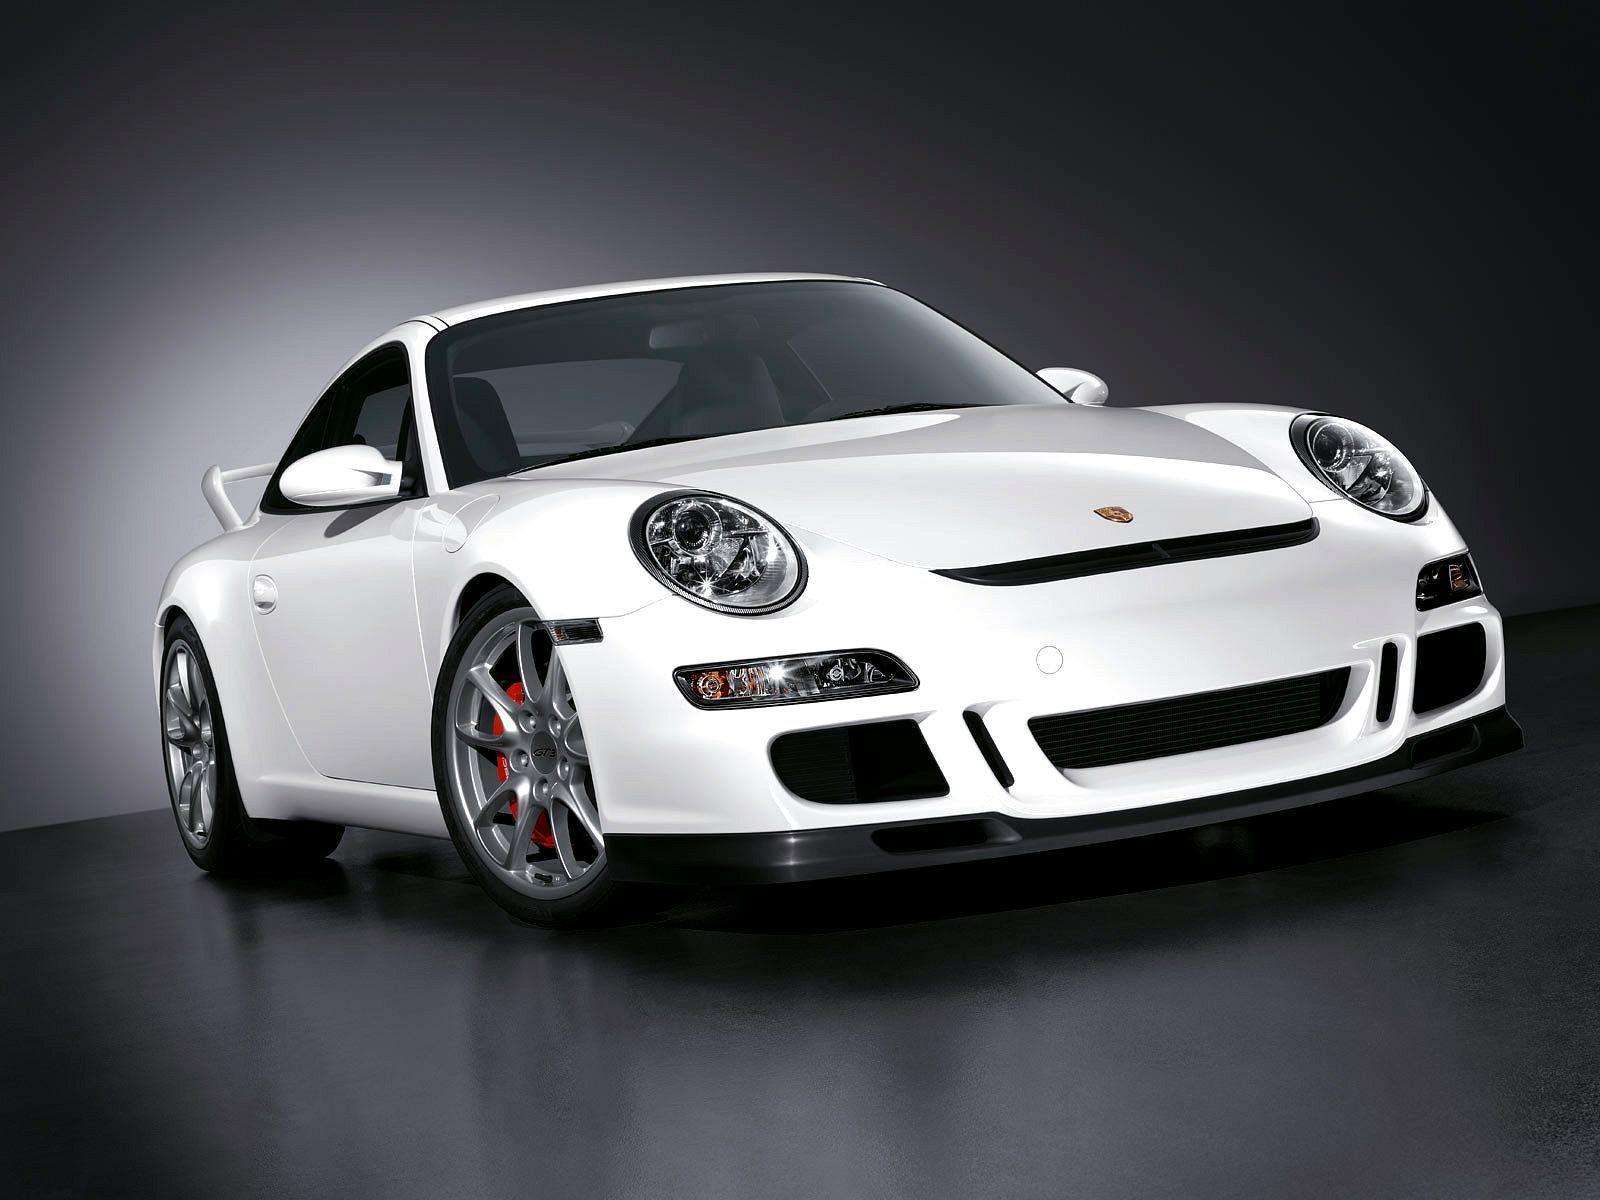 Porsche GT3 36426 1600x1200 px